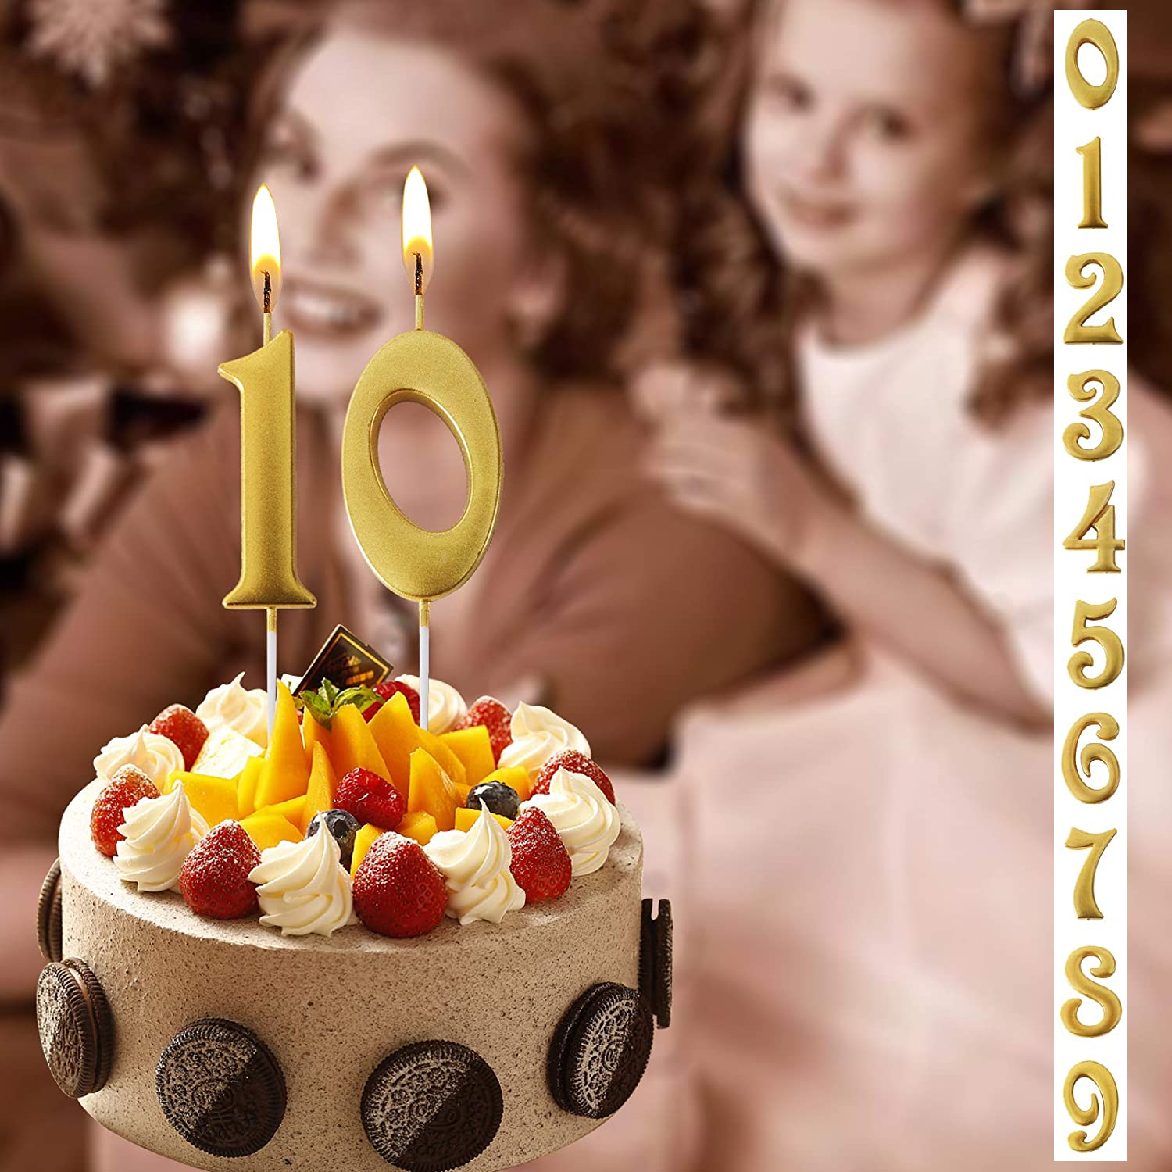 Cake/Cupcake Candle - 'Ornate' gold candle - # 7 - Rampant Coffee Company